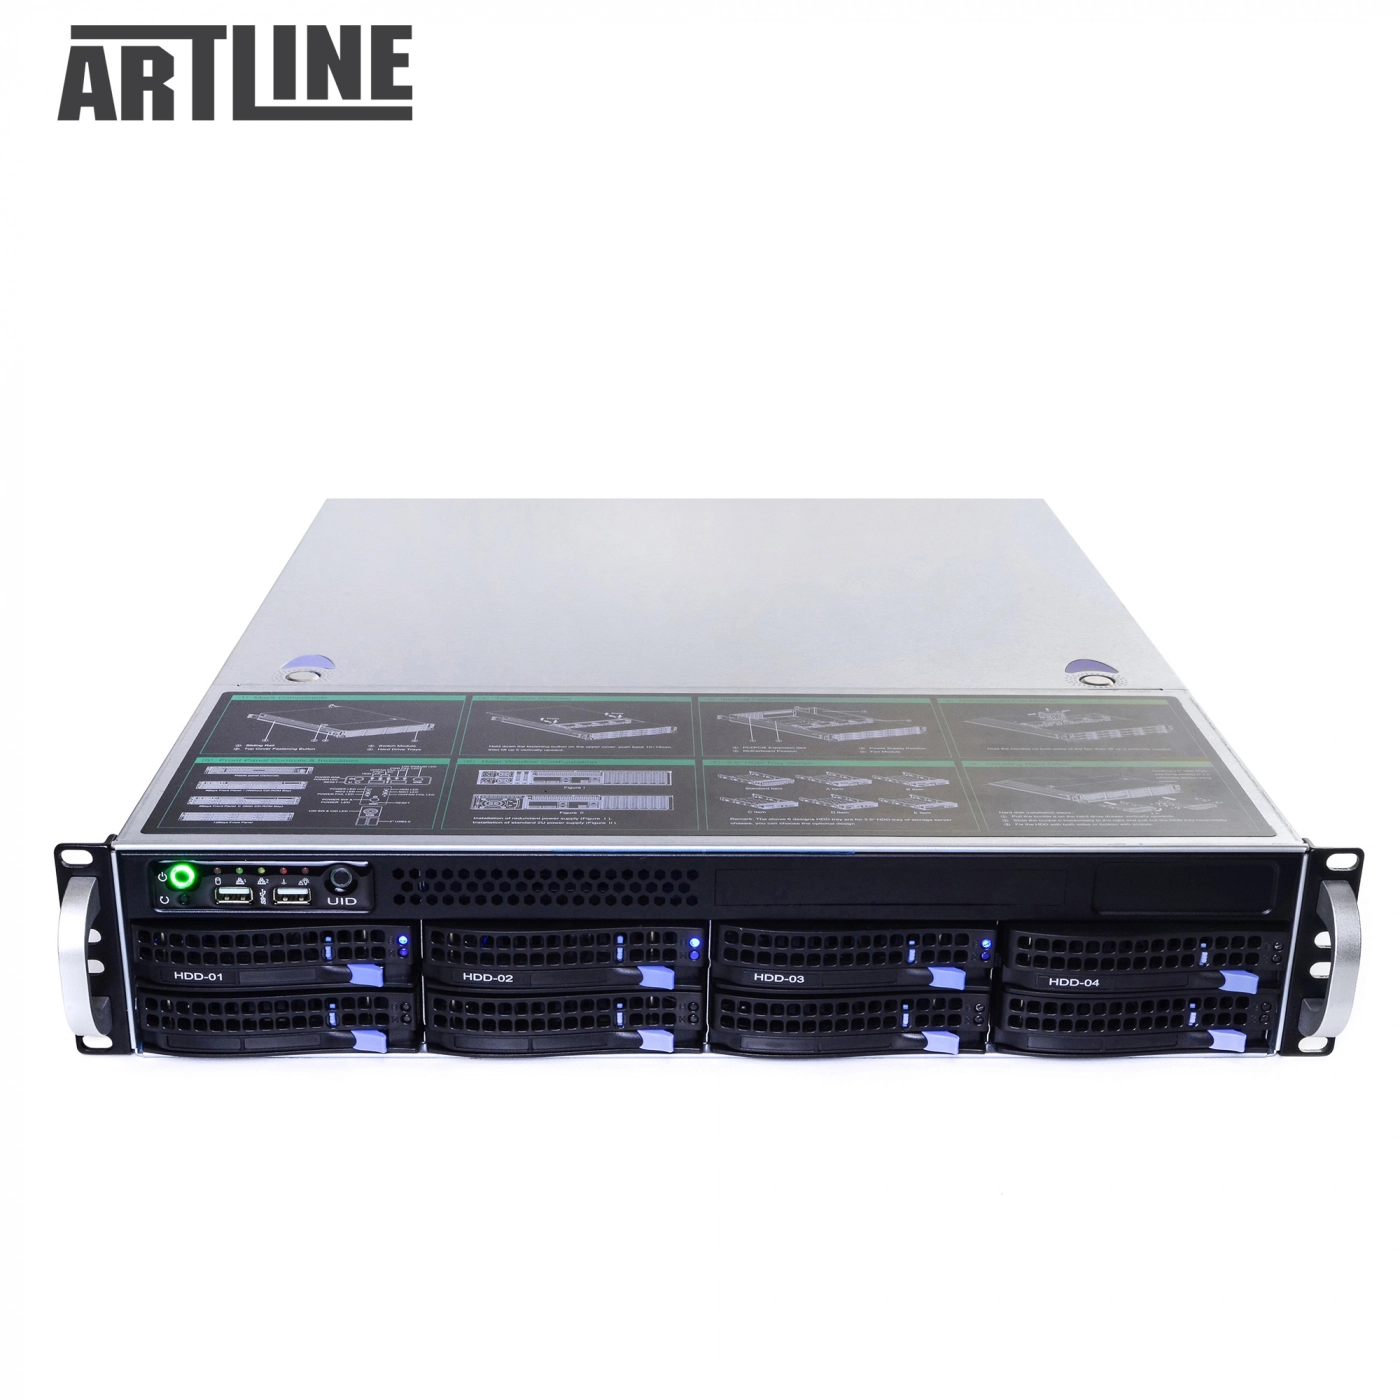 Купити Сервер ARTLINE Business R38v08 - фото 10